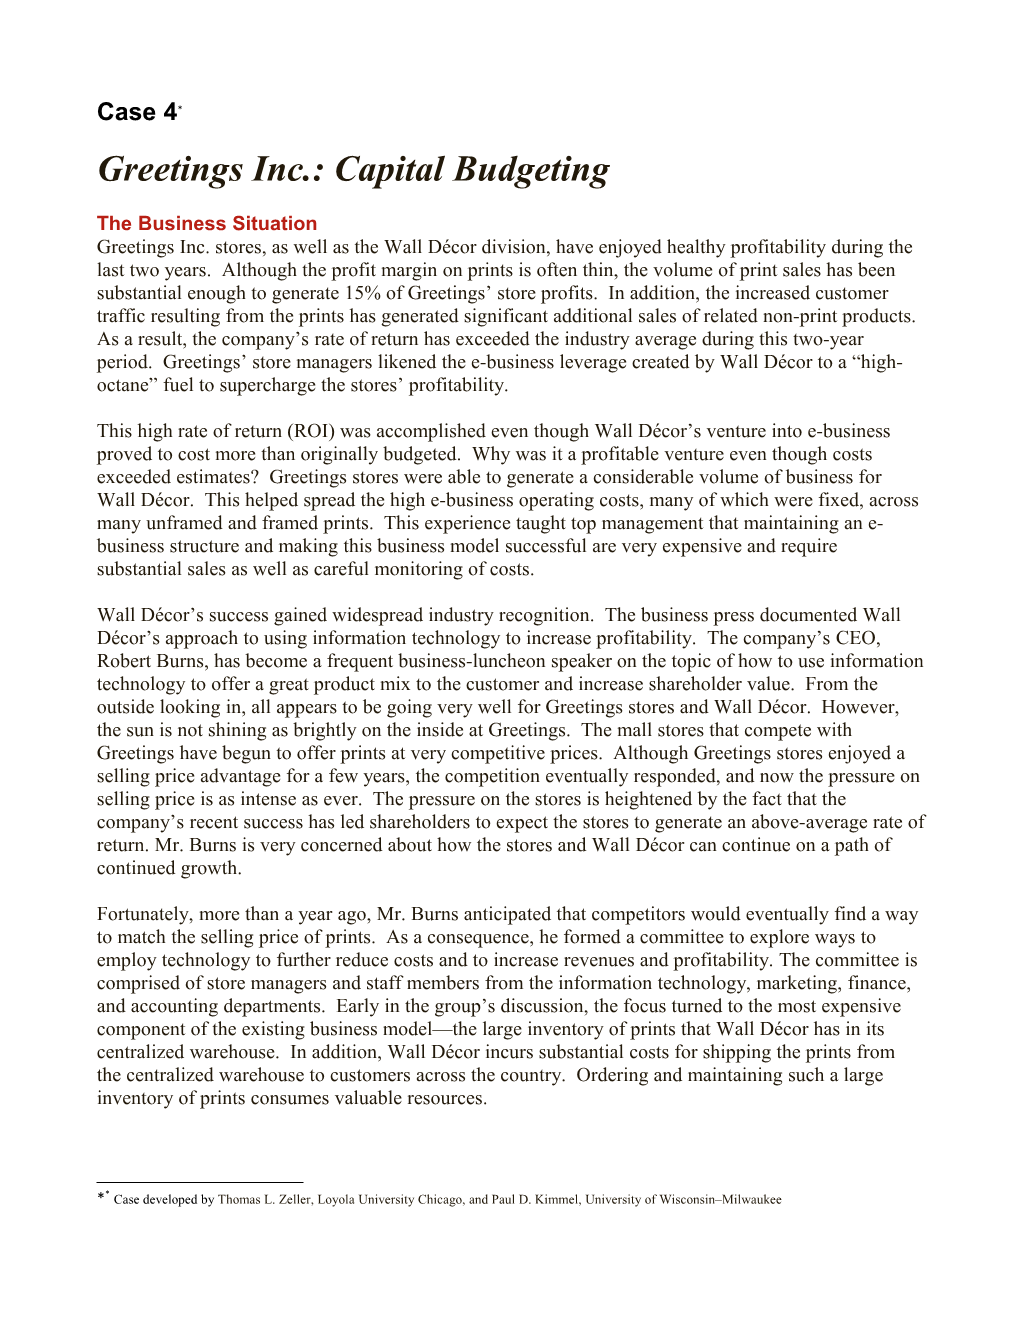 Greetings Inc.: Capital Budgeting